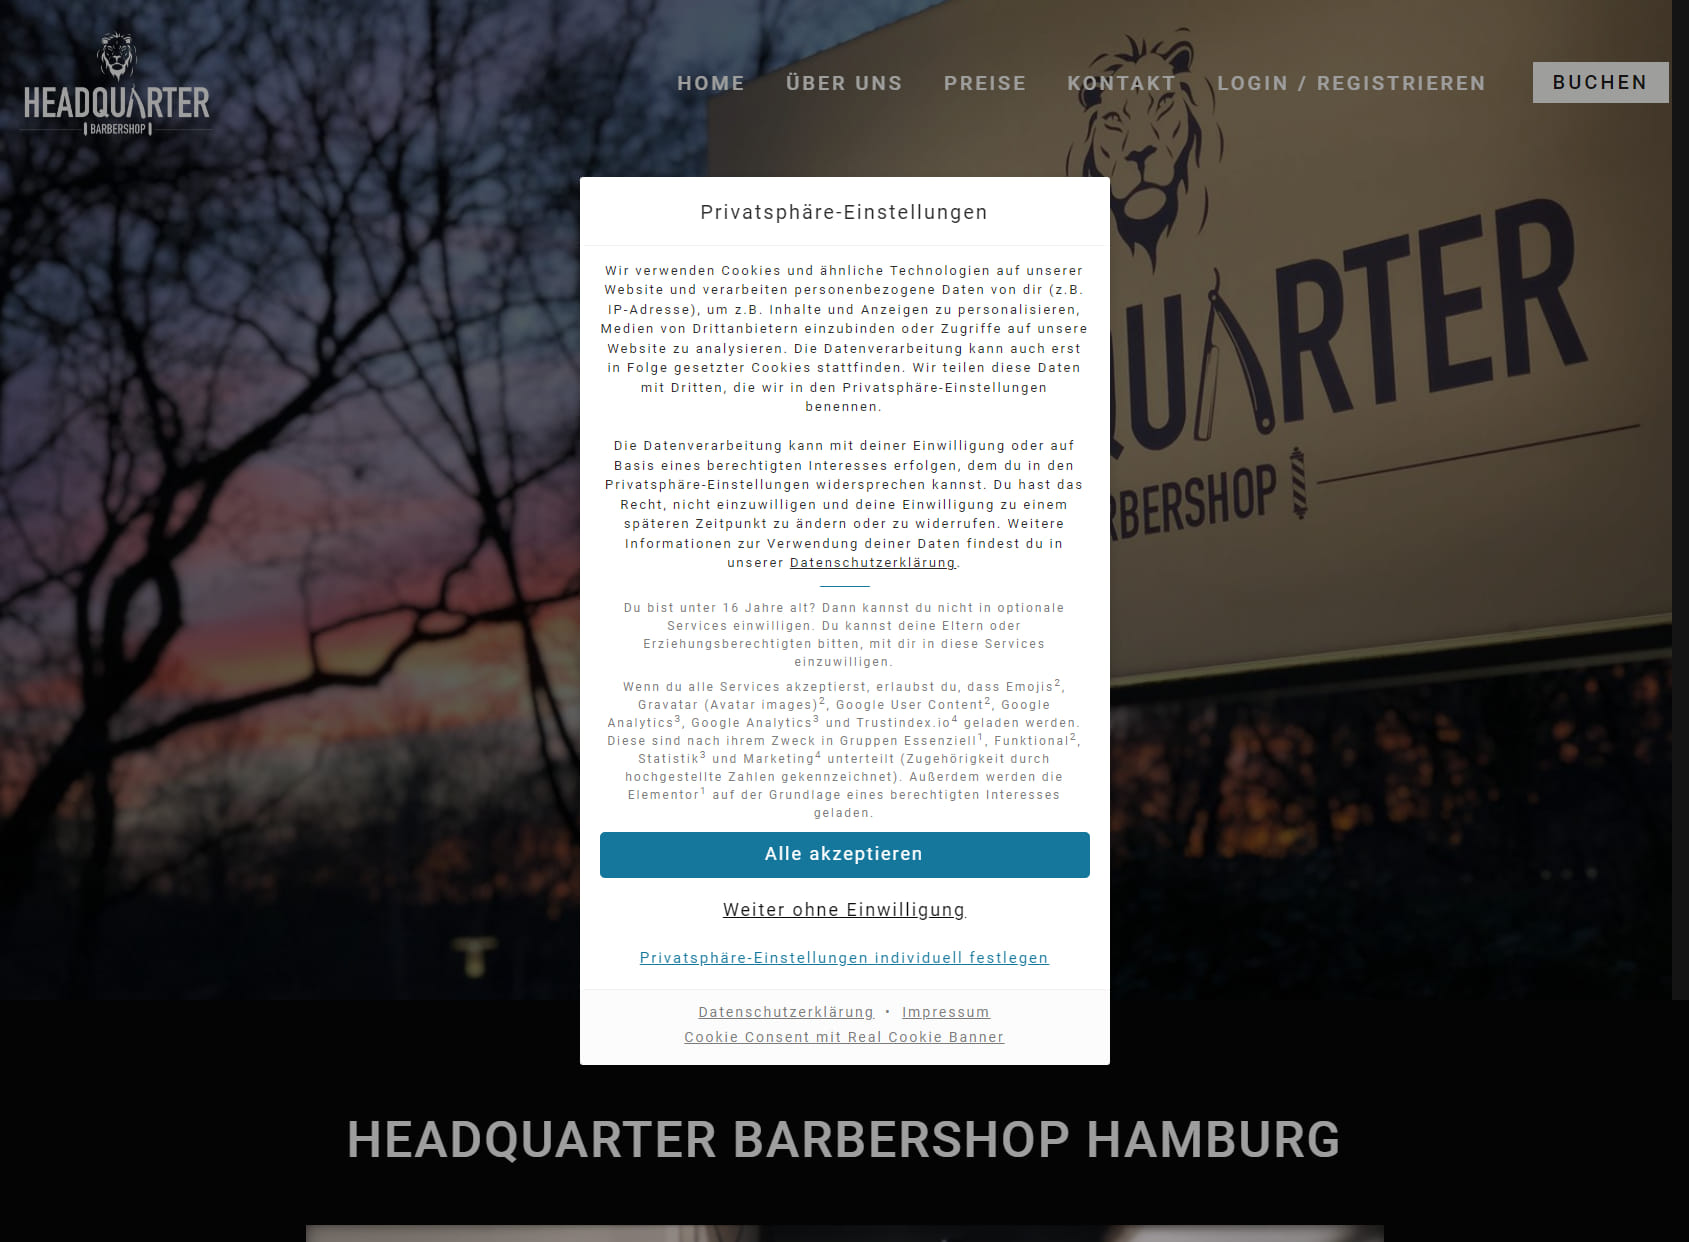 Headquarter Barbershop